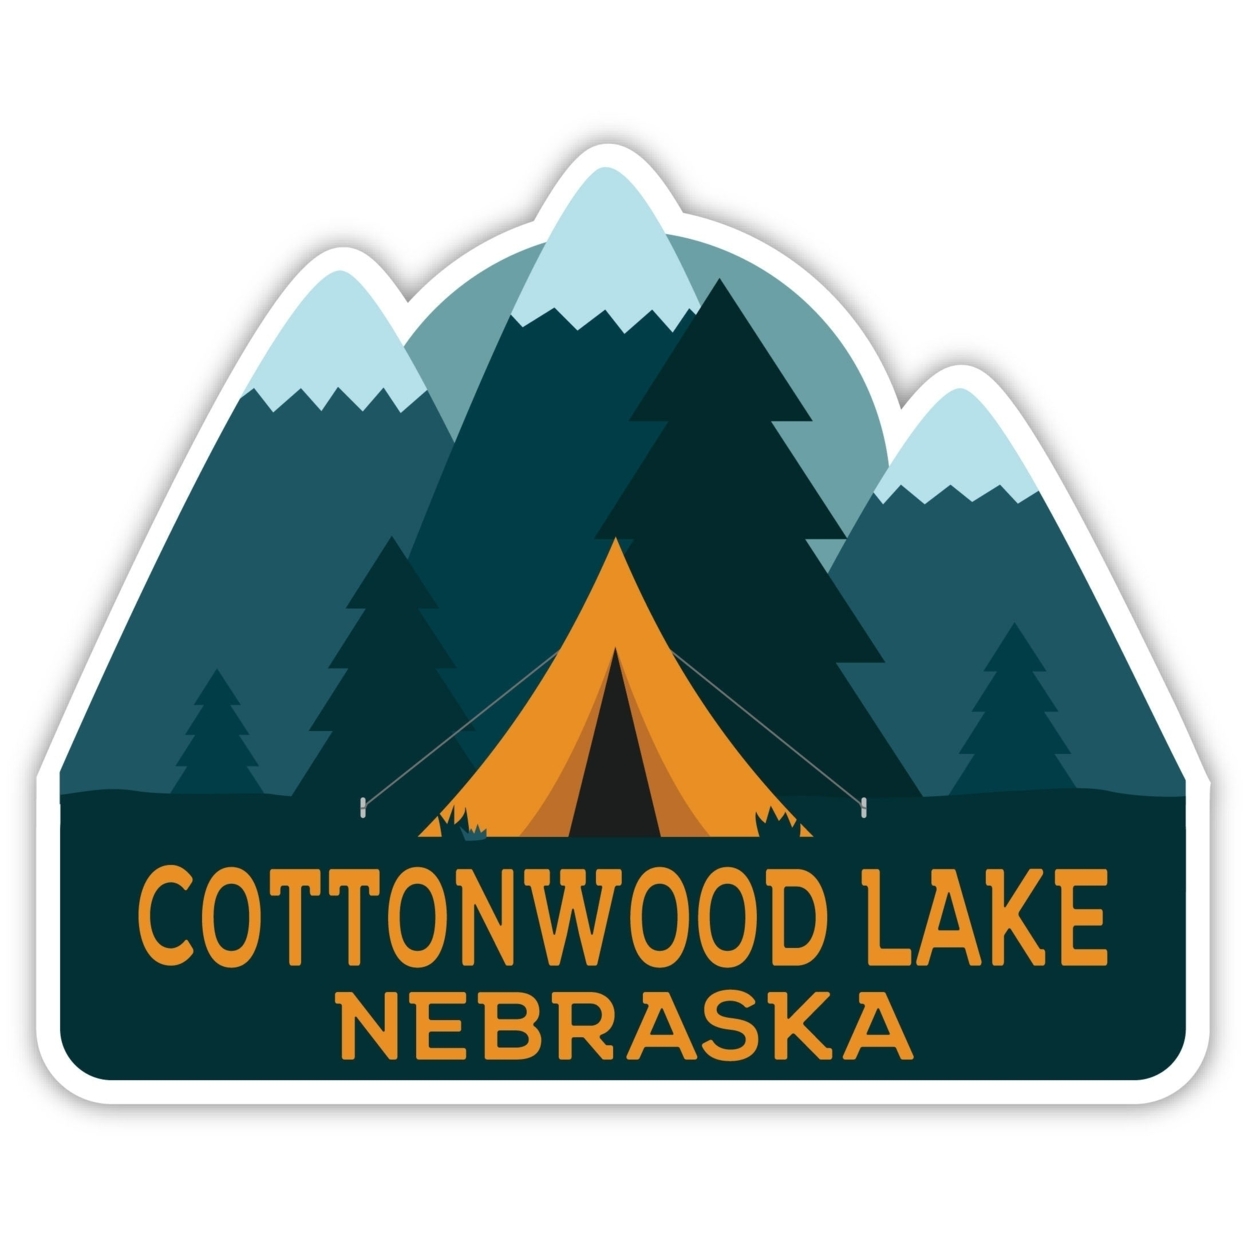 Cottonwood Lake Nebraska Souvenir Decorative Stickers (Choose Theme And Size) - 4-Pack, 10-Inch, Tent